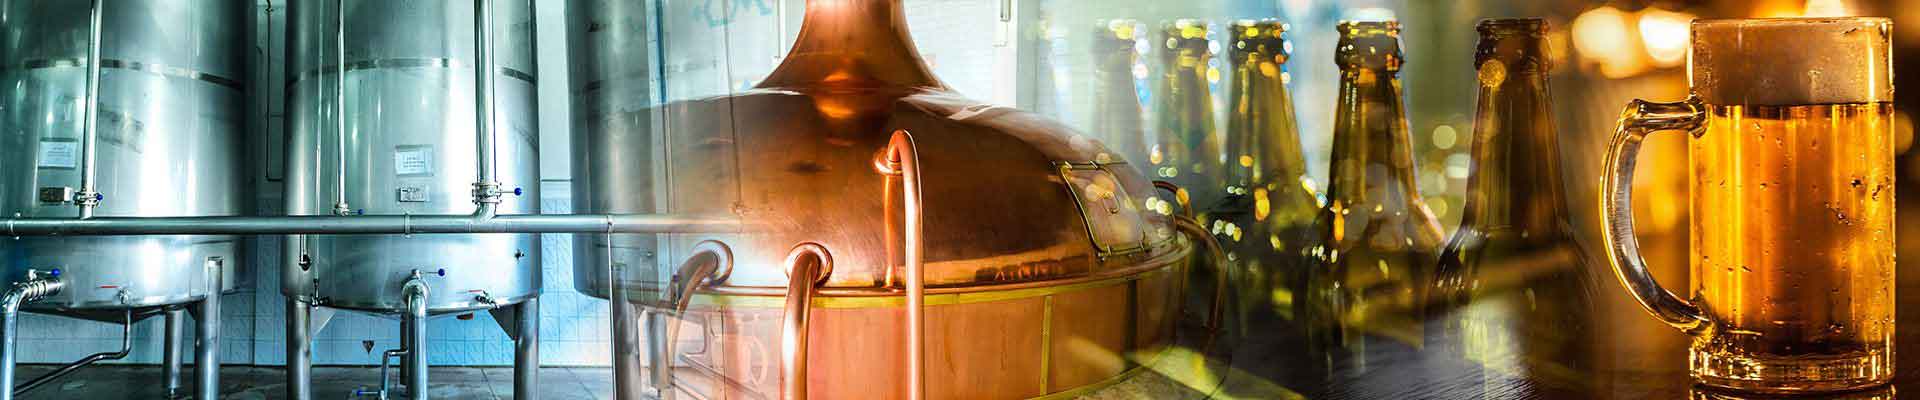 Breweries and Distilleries Industry